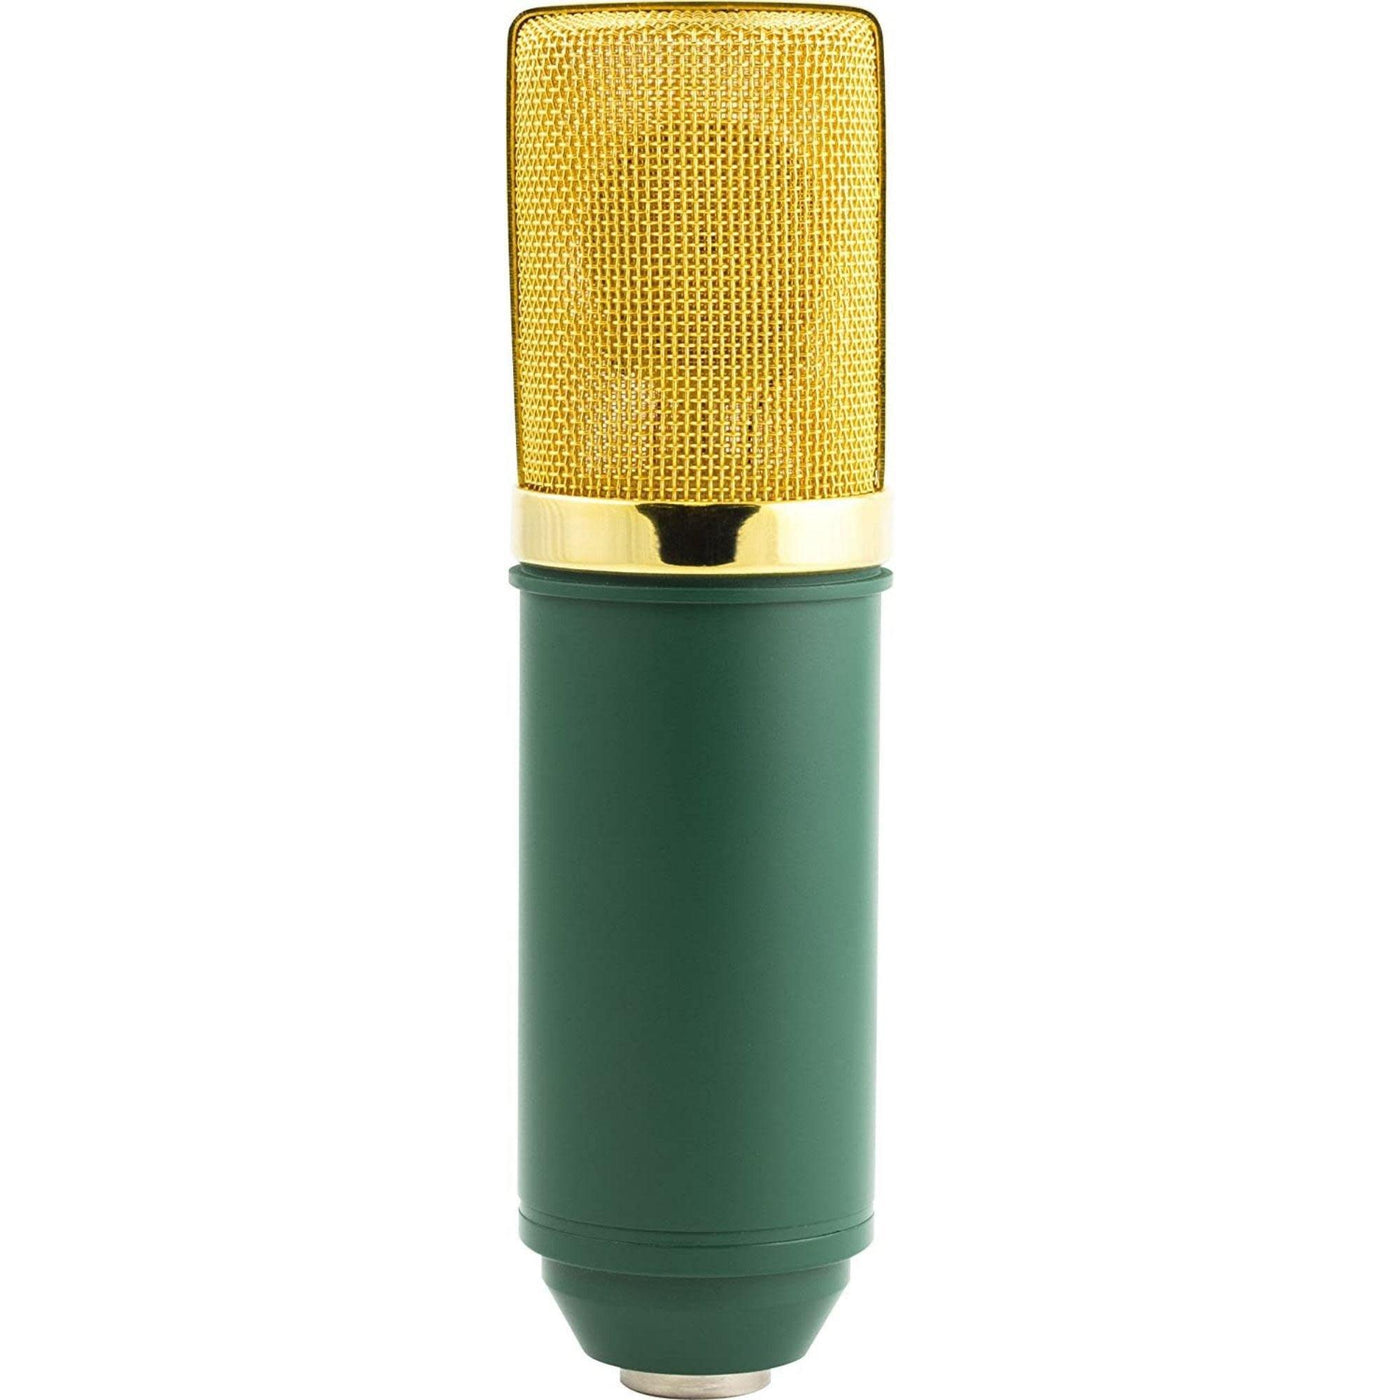 MXL V67G Large-Diaphragm Cardioid Condenser Microphone